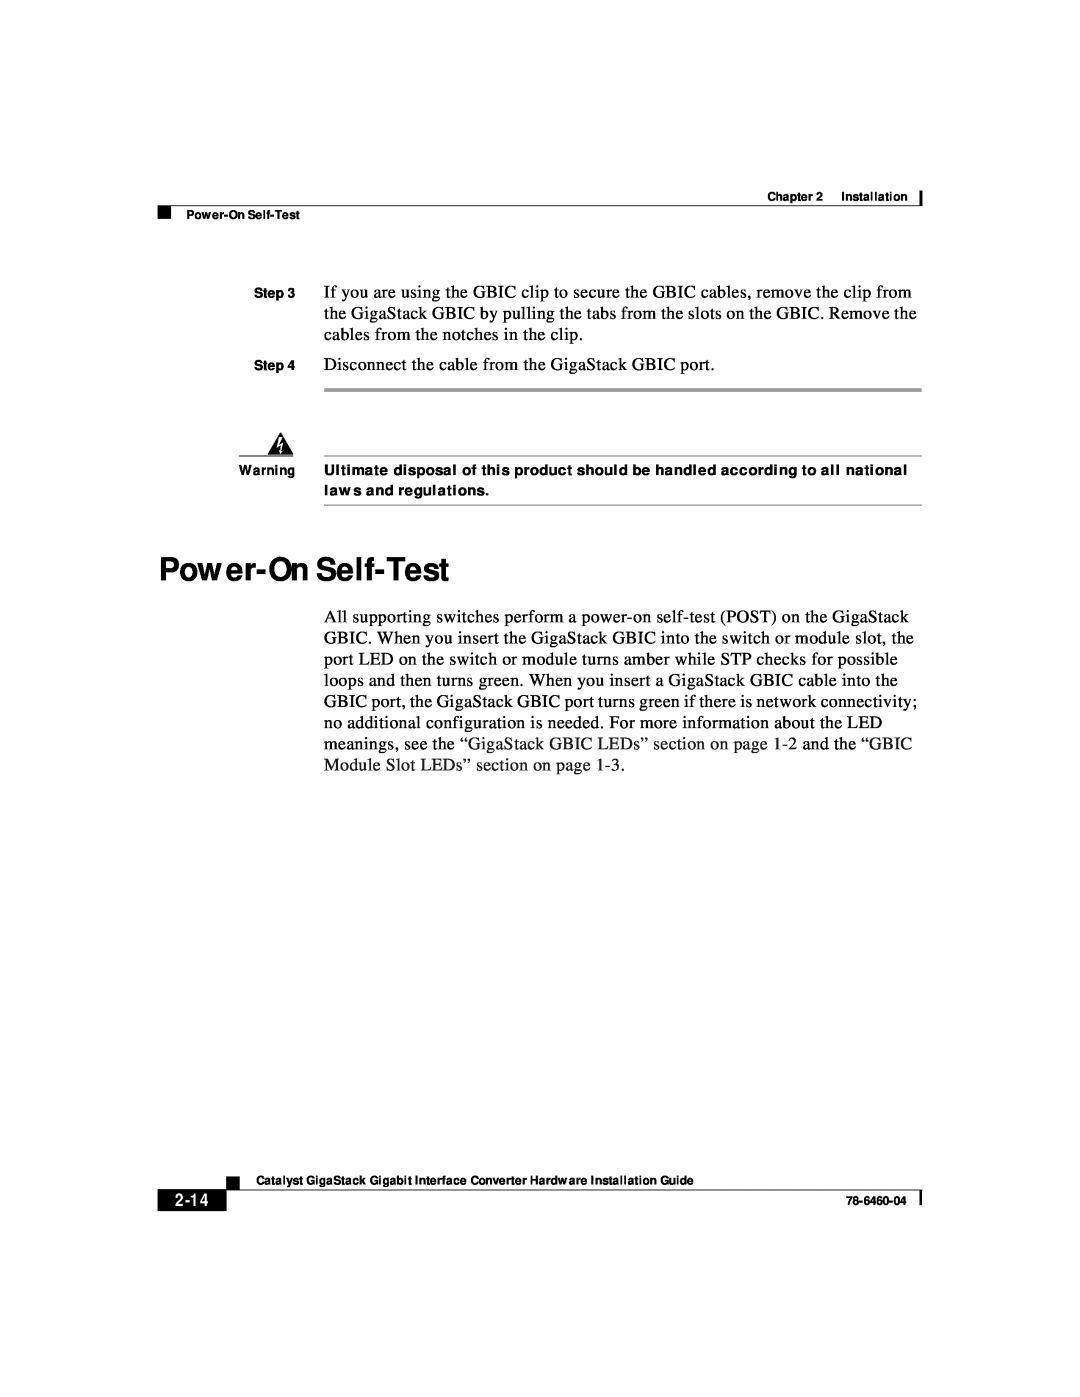 Cisco Systems WS-X3500-XL manual Power-On Self-Test, 2-14 